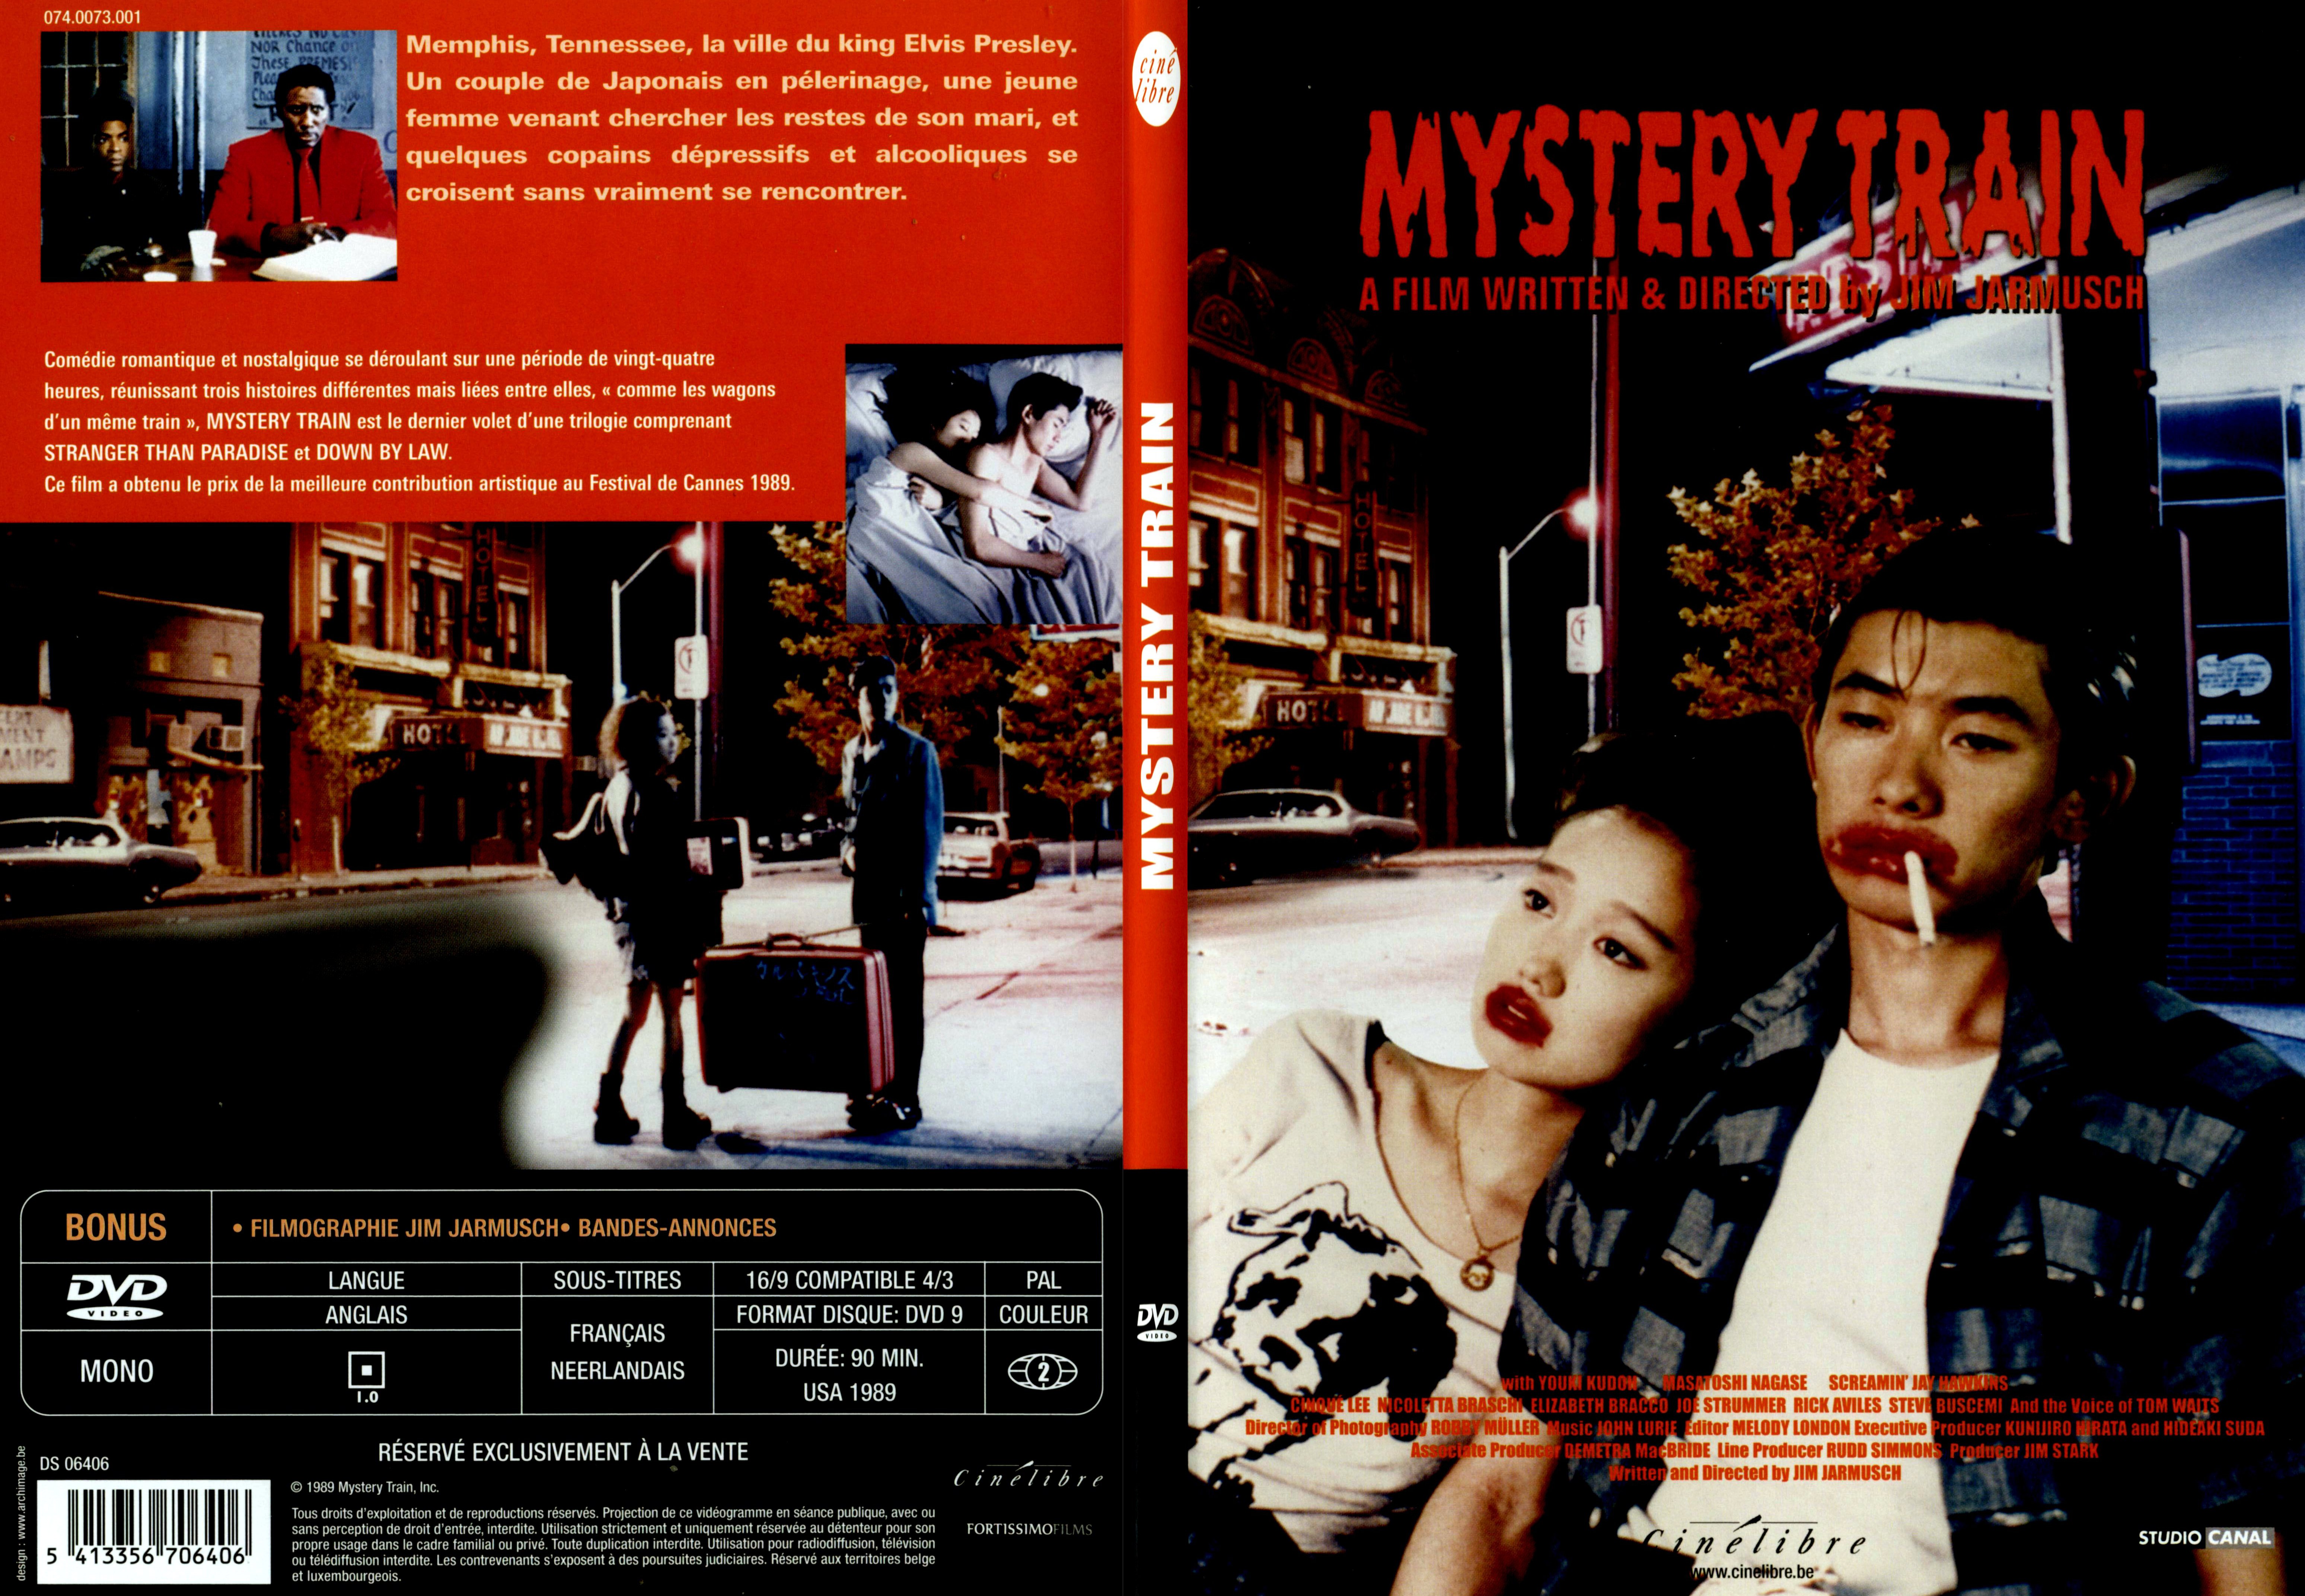 Jaquette DVD Mystery train - SLIM